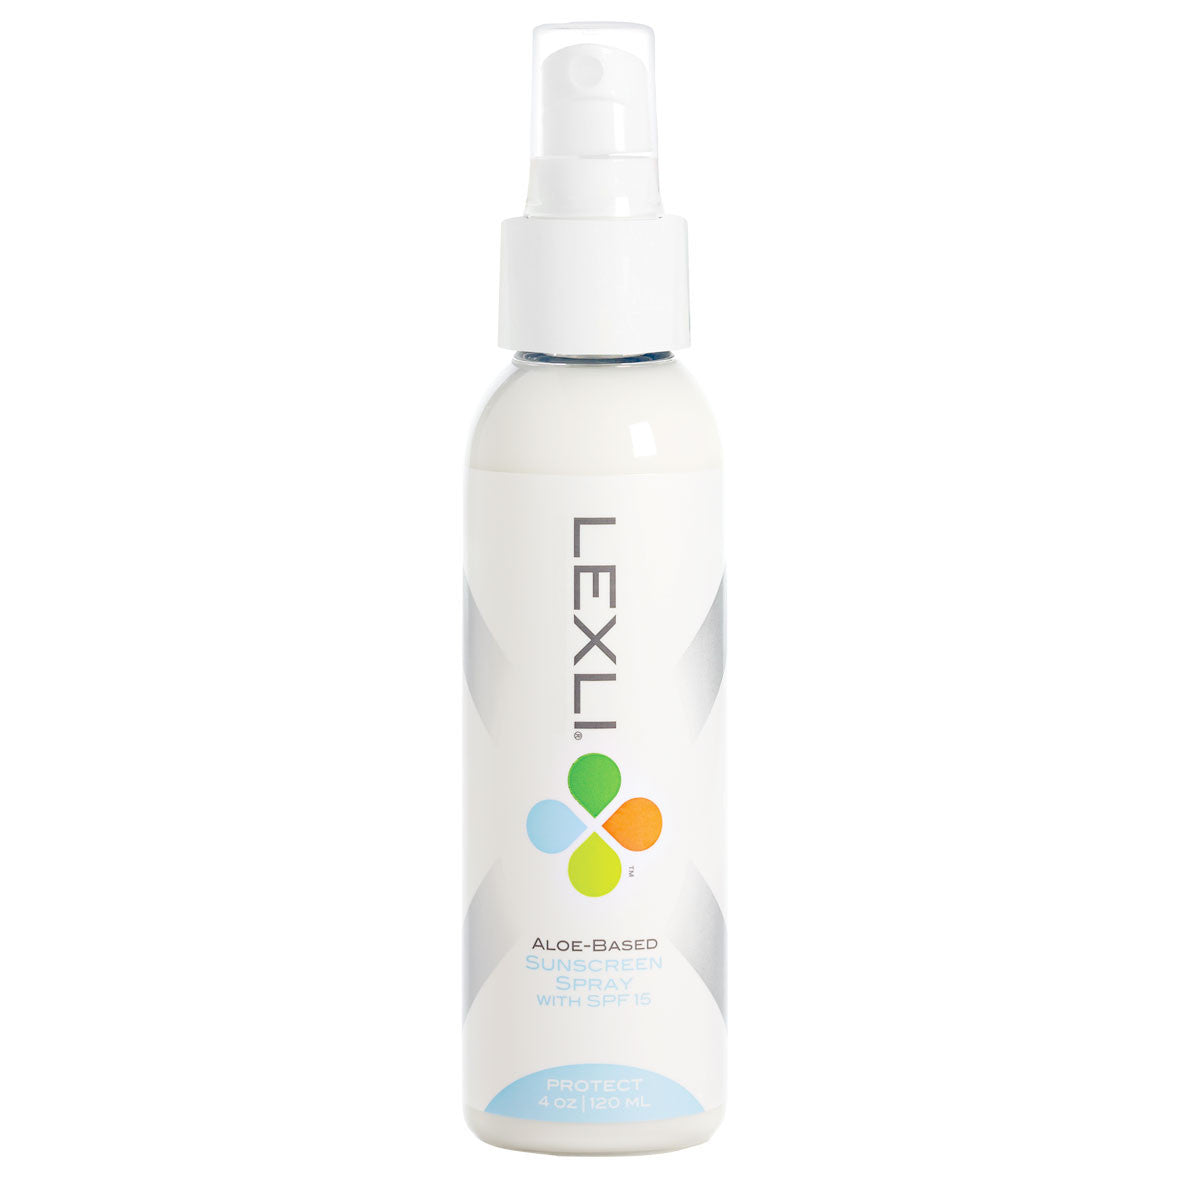 Lexli Sunscreen Spray with SPF 15 4 oz bottle